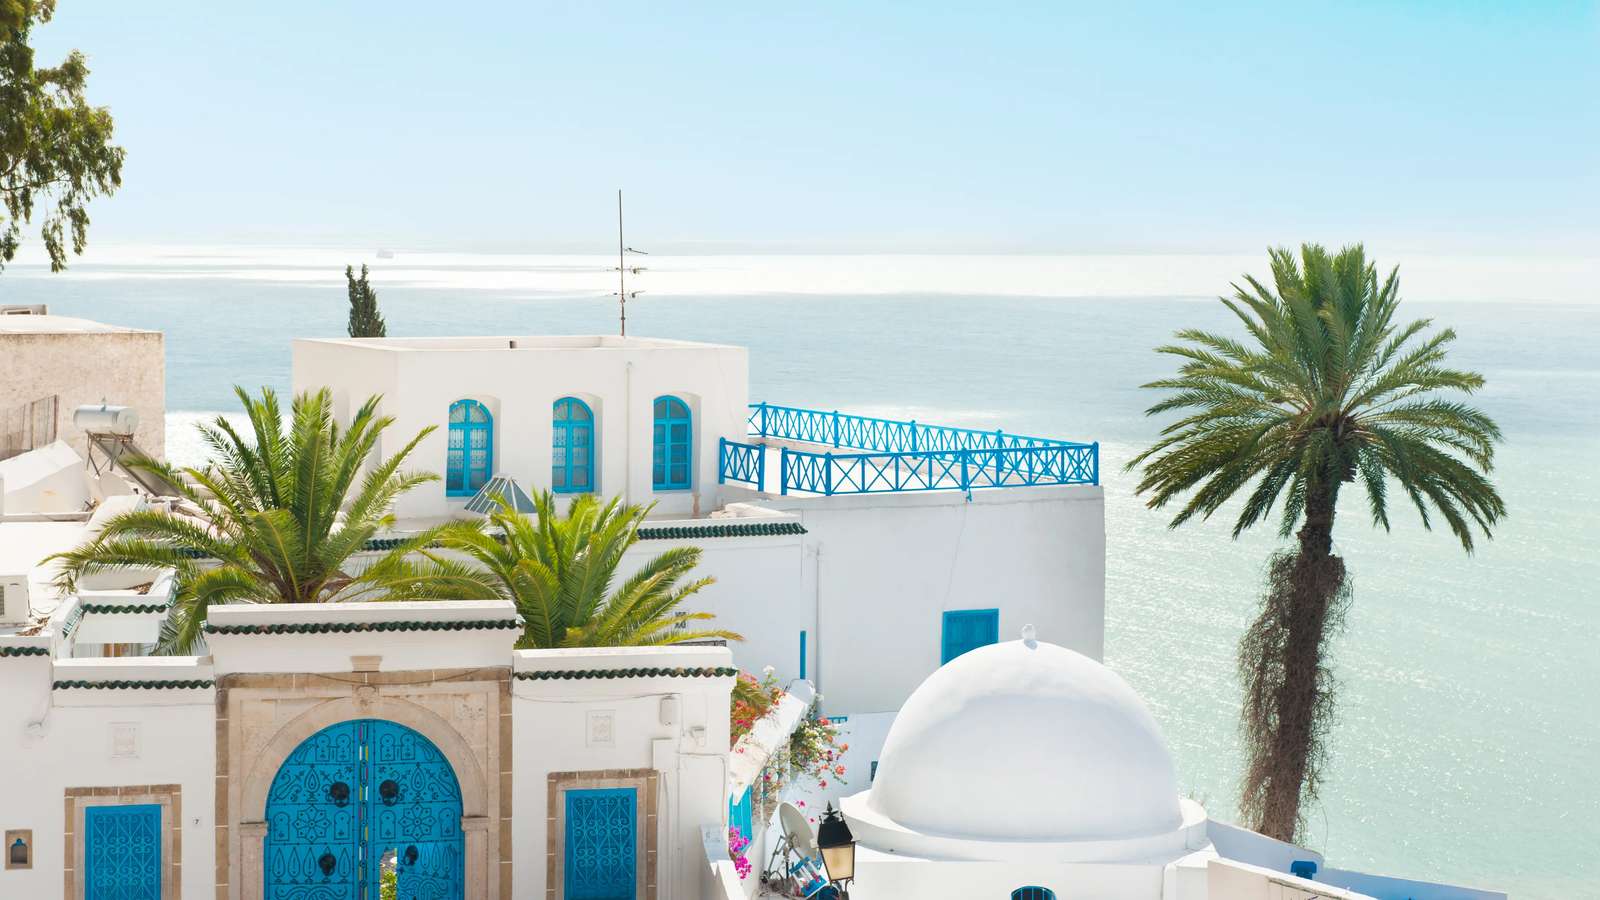 Tunis, stolica Tunezji w Afryce puzzle online